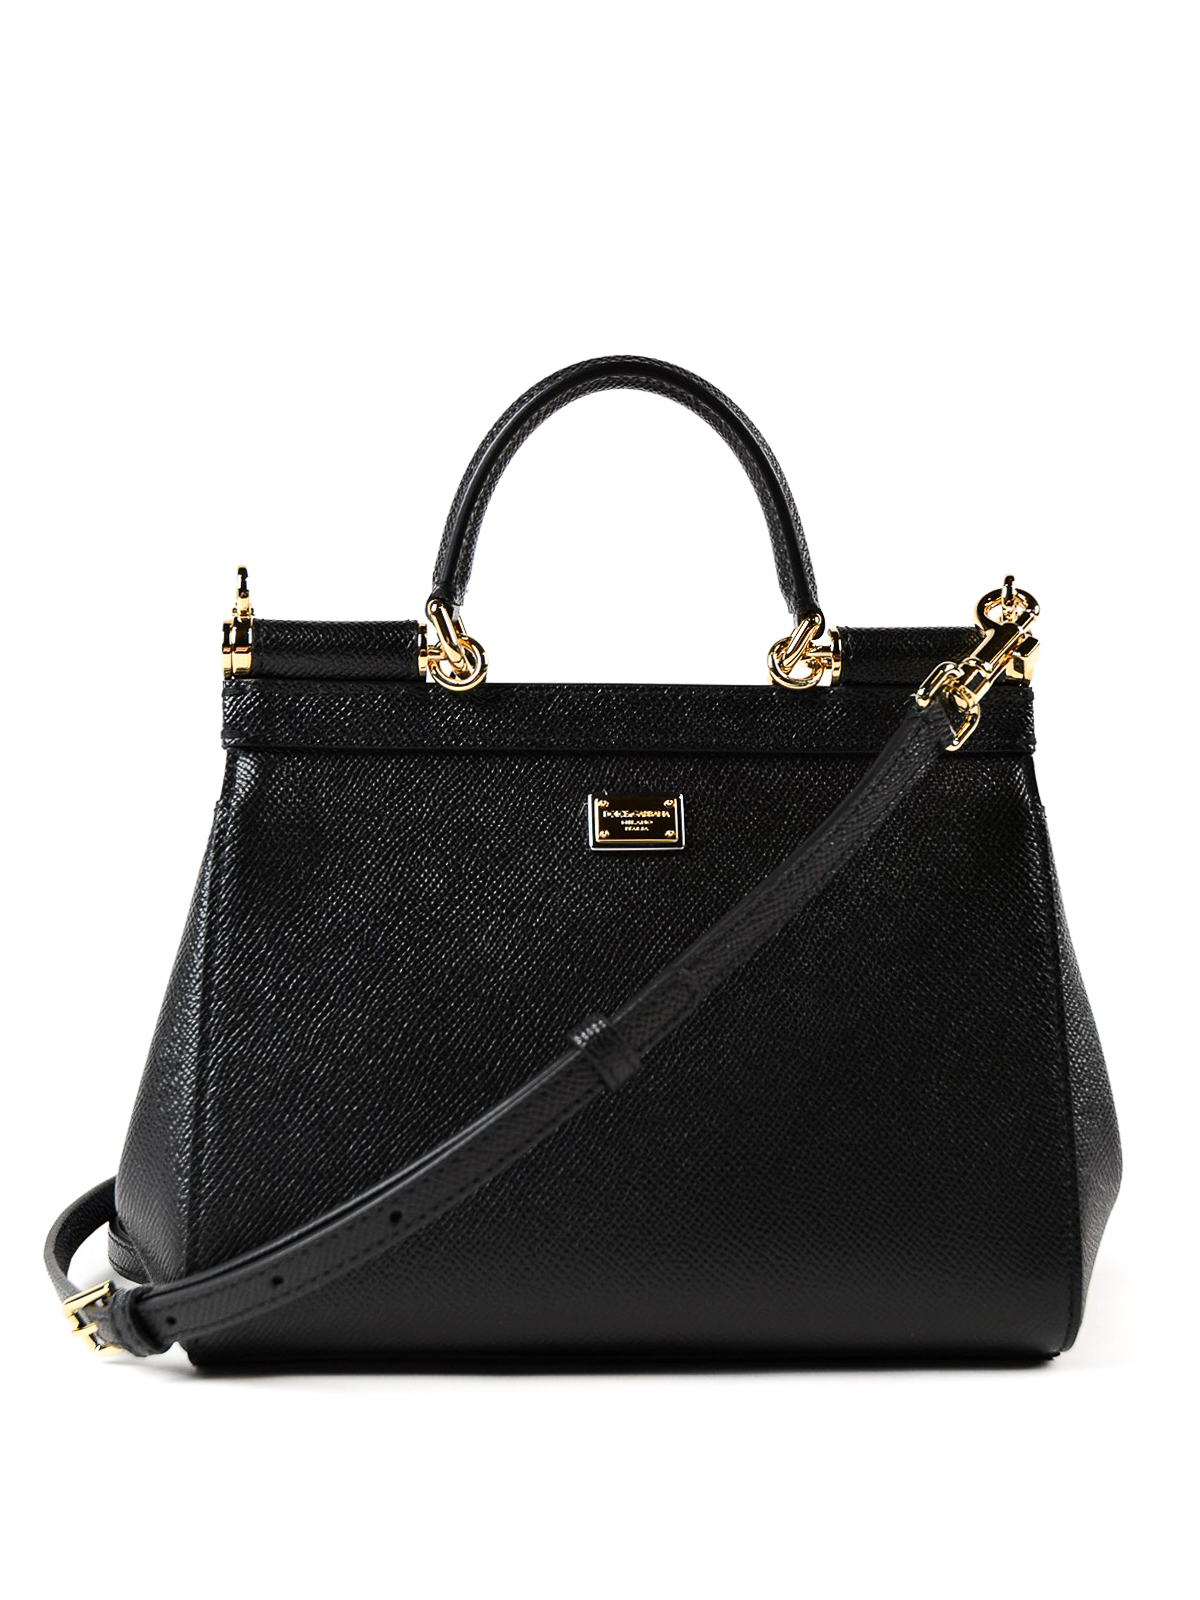 Cross body bags Dolce & Gabbana - Sicily Love small black leather